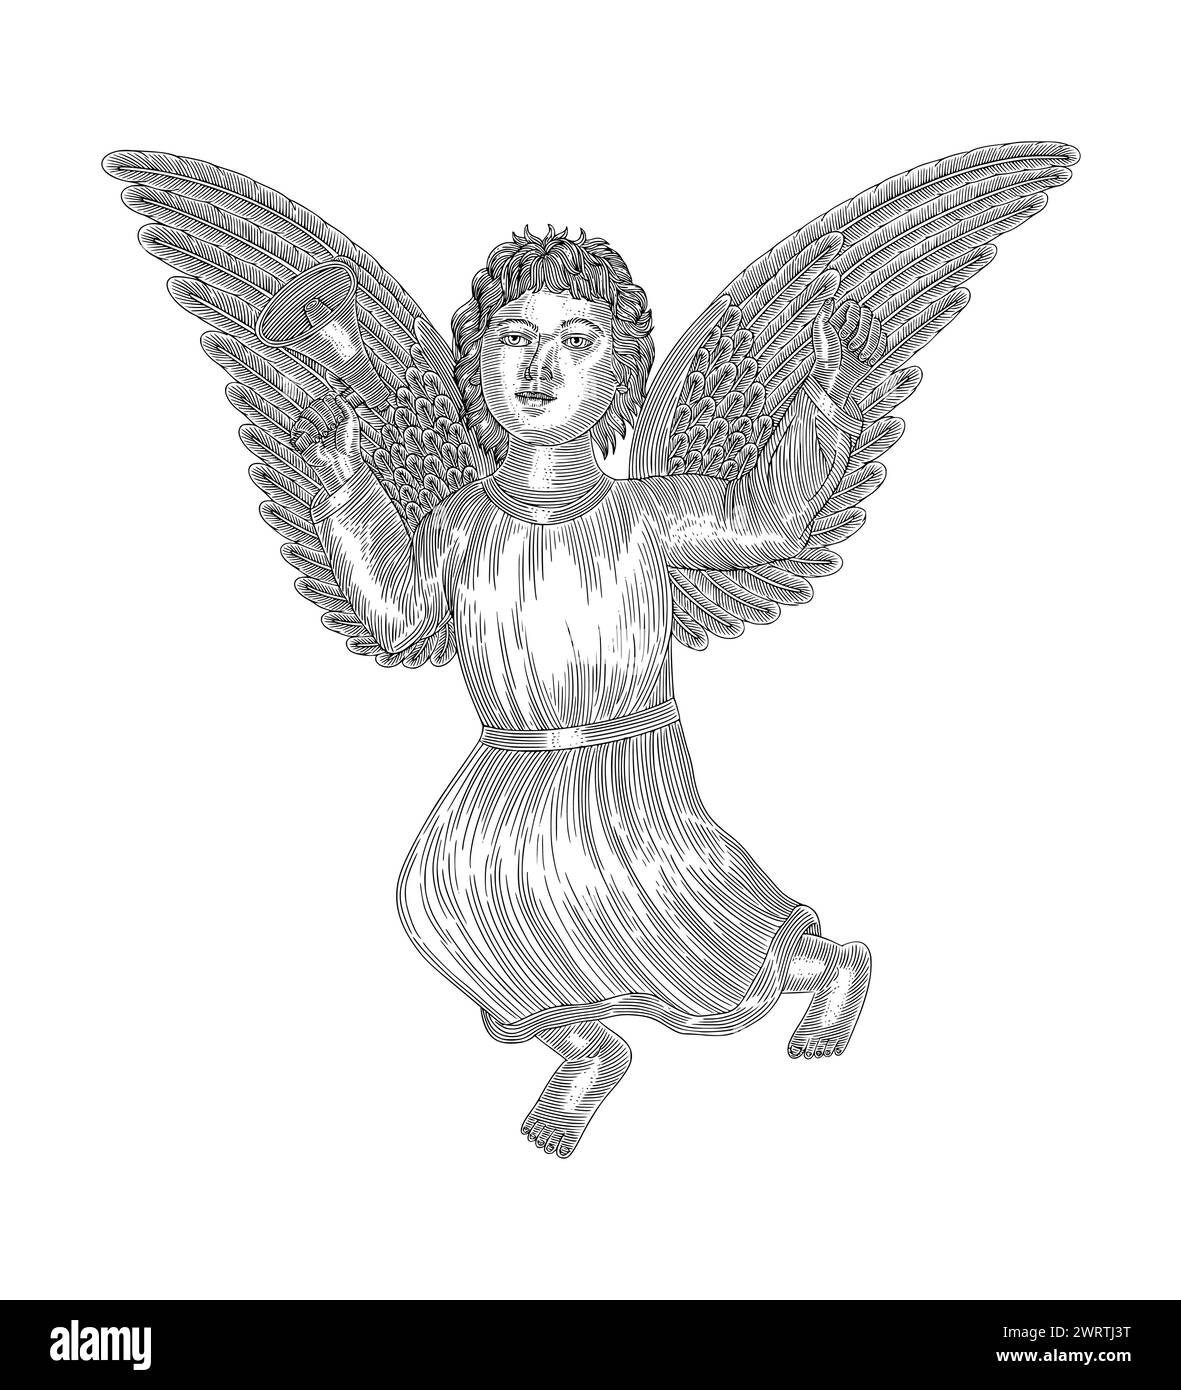 Cupid Engel mit Megaphon, Vintage Gravur Zeichnung Stil Illustration Stock Vektor